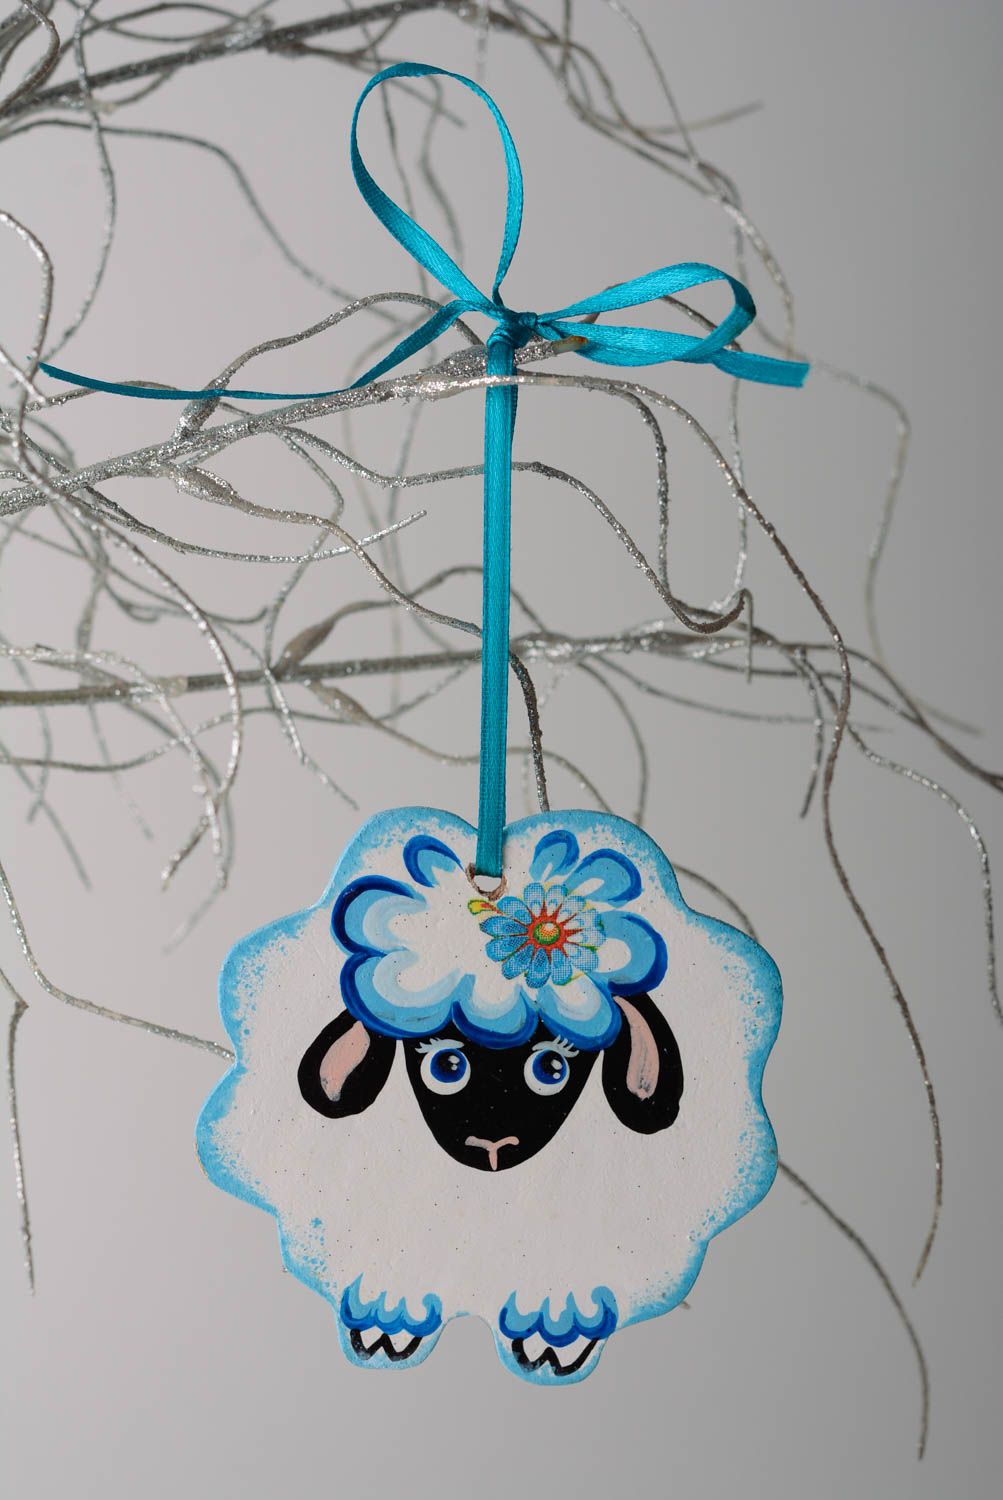 Handmade bright decoupage plywood wall hanging sheep figurine photo 1